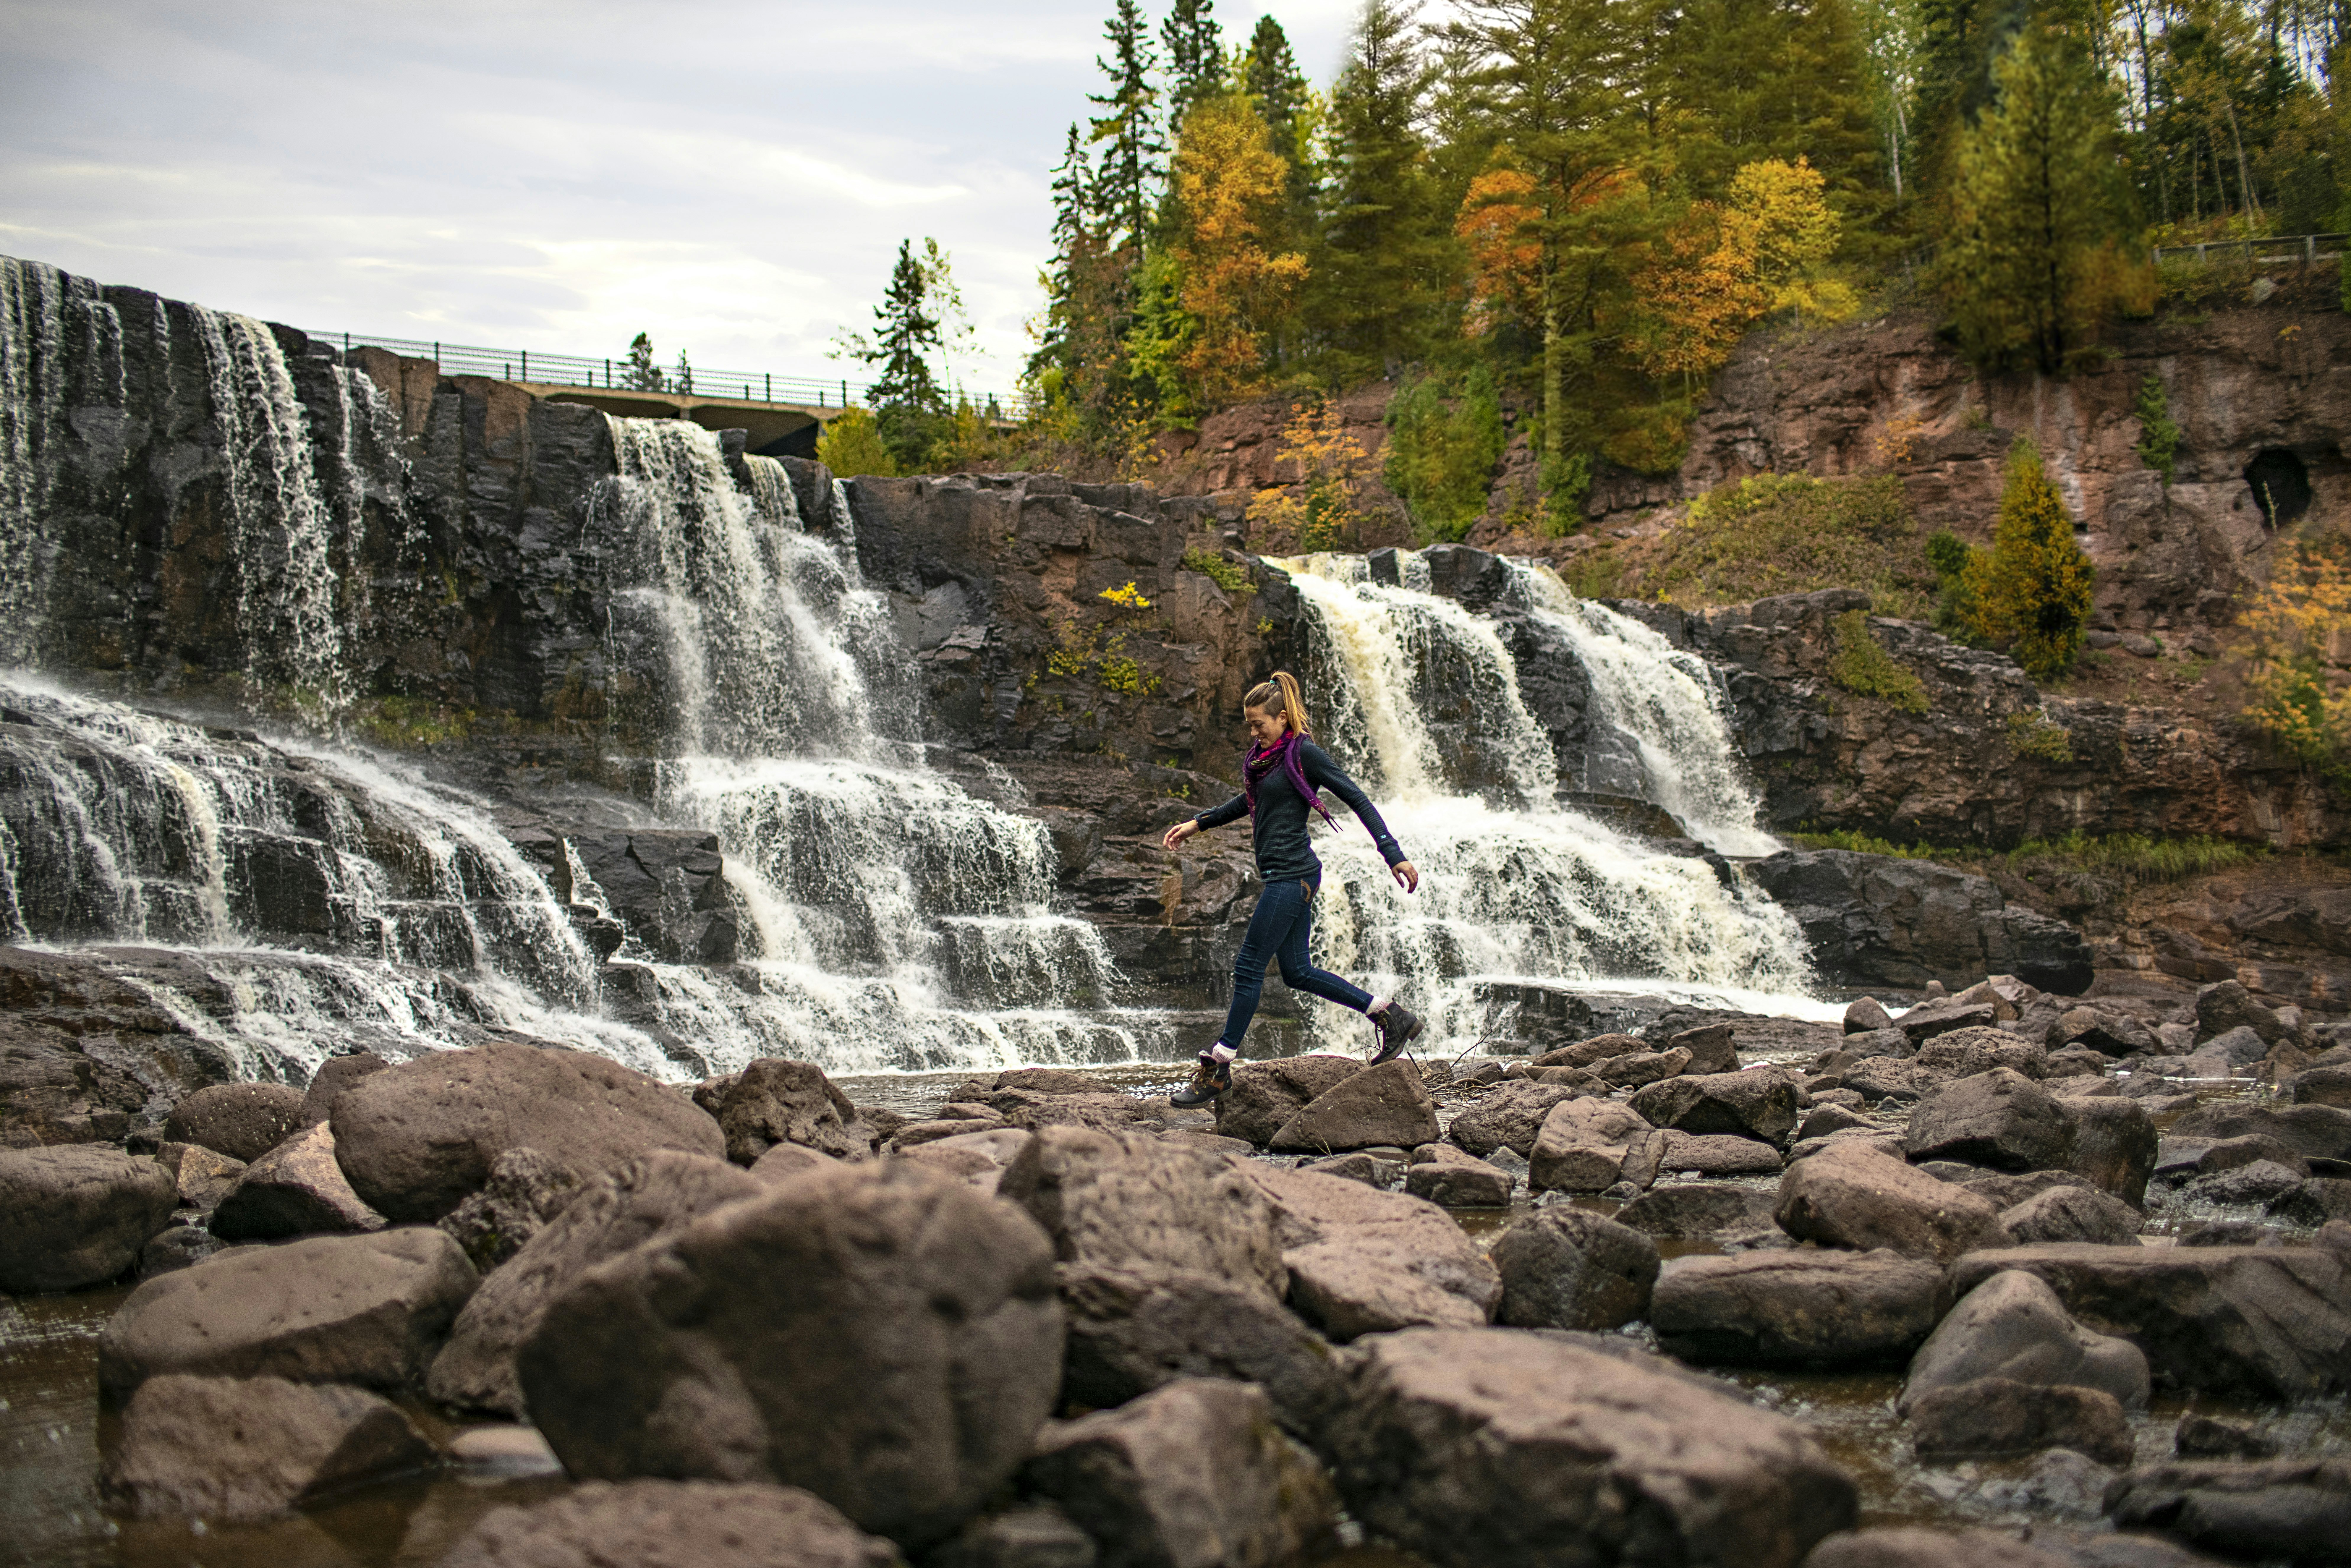 A woman hops across rocks in front of a waterfall